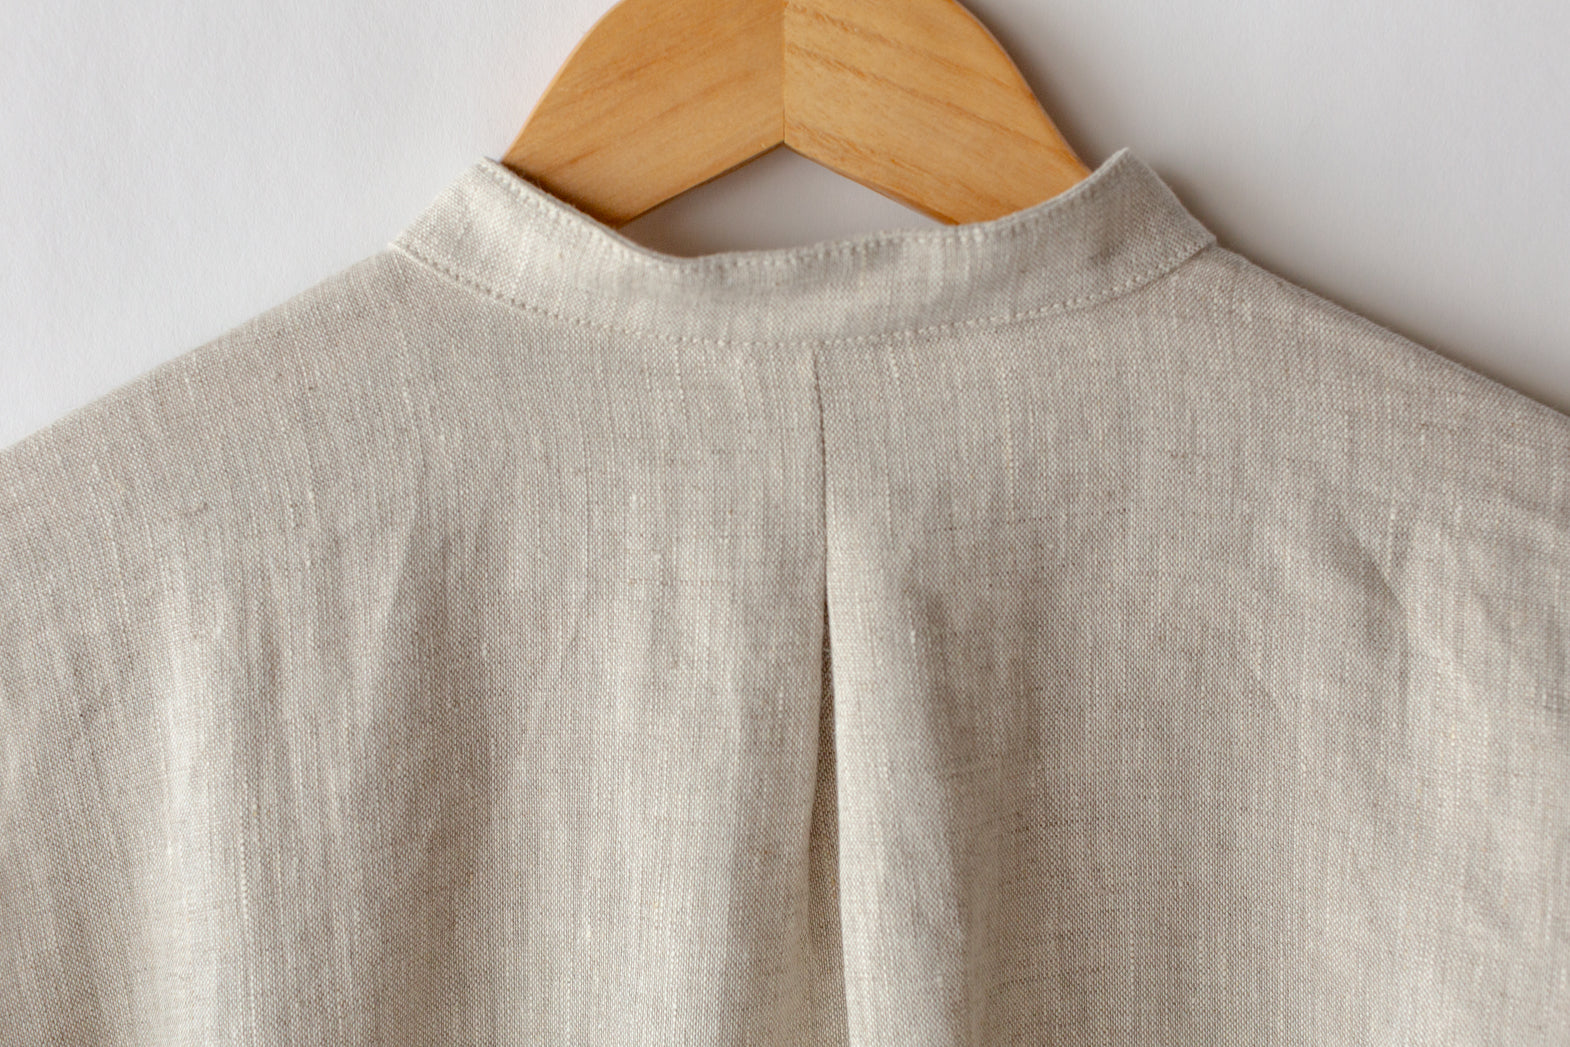 Coyota Shirt - Oatmeal Linen